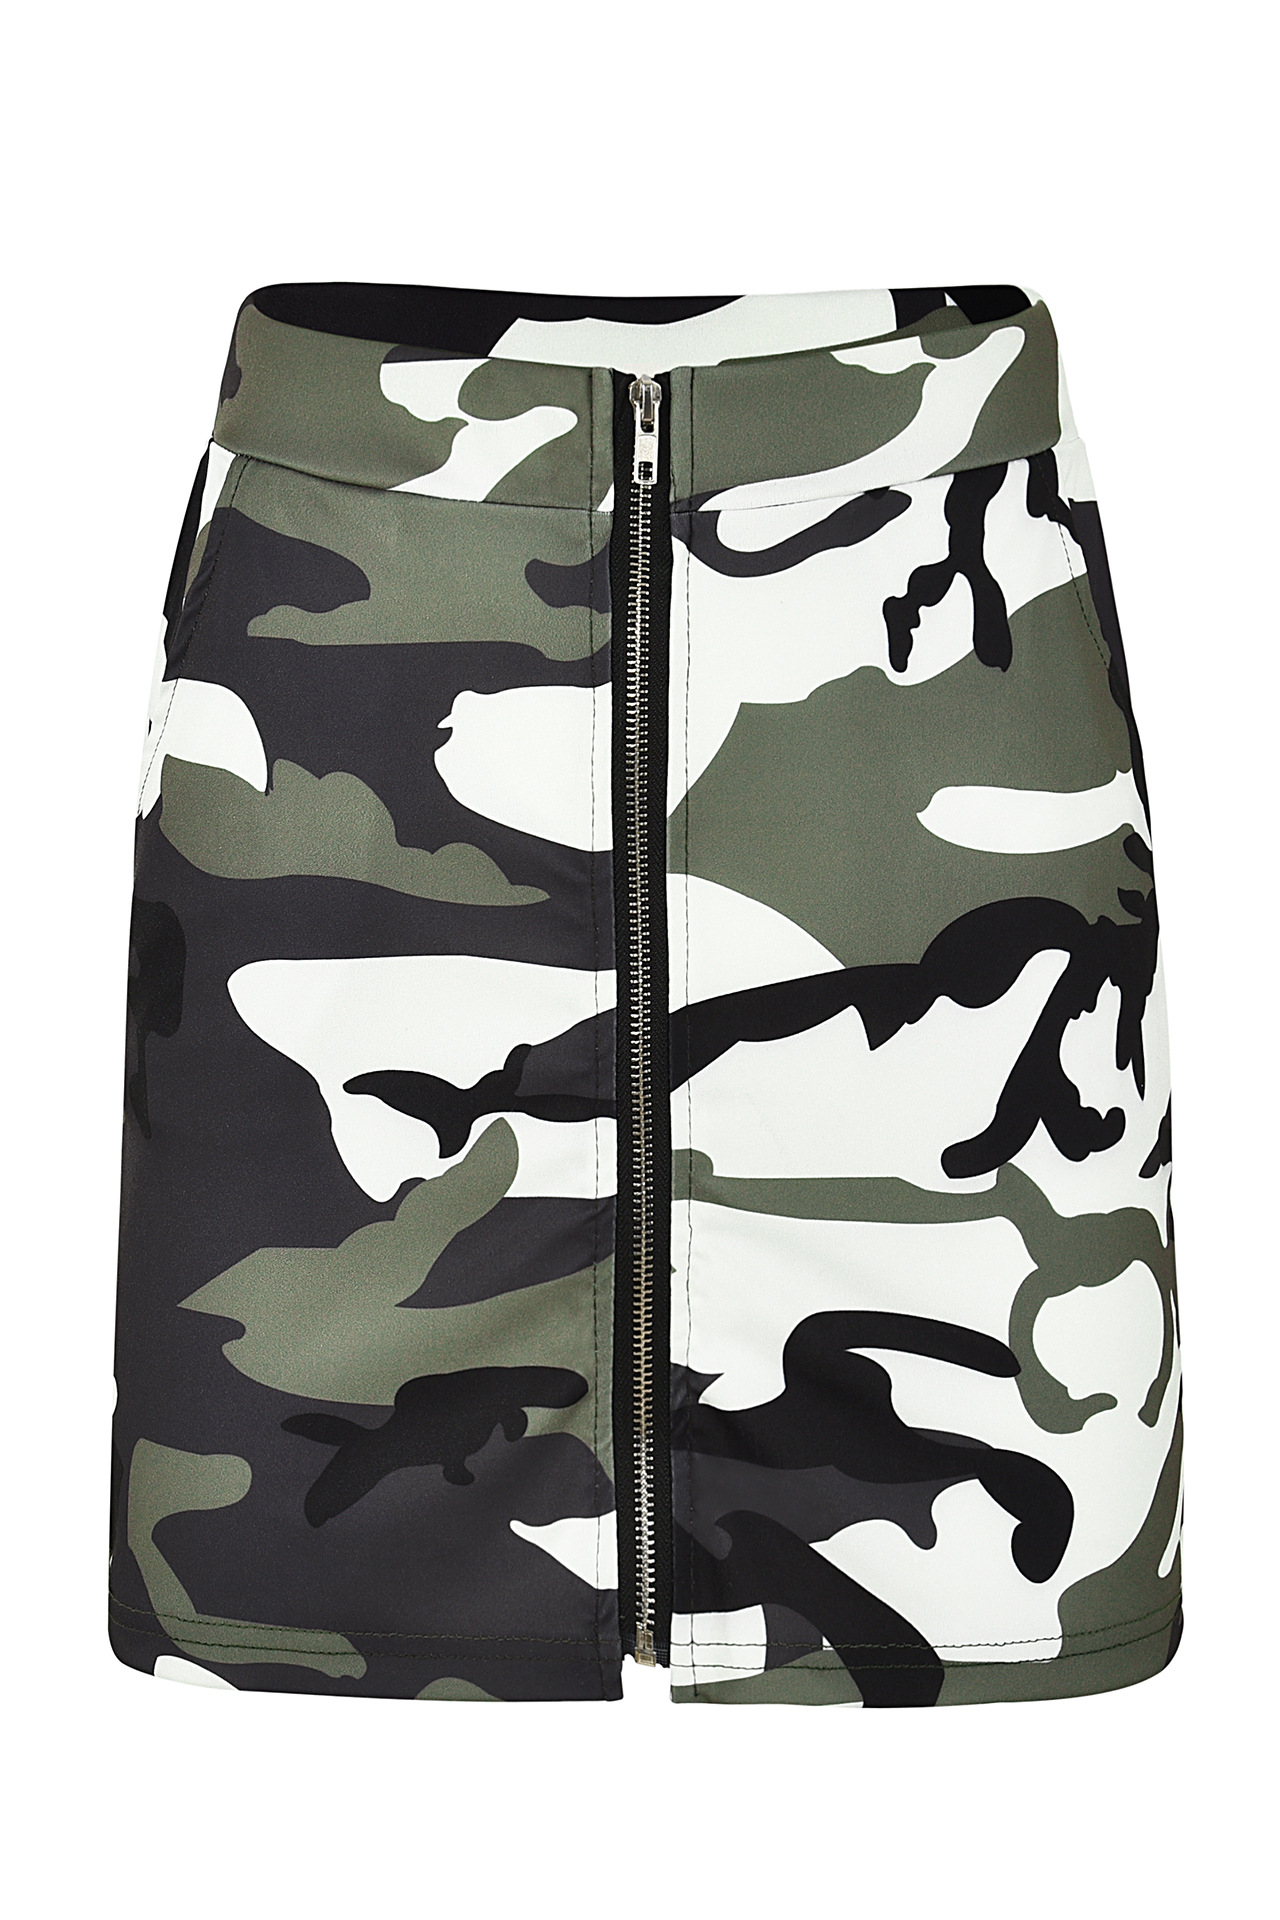 Women Camouflage Mini Skirt Front Zipper High Waist Sexy Slim Shoot Bodycon Skirt